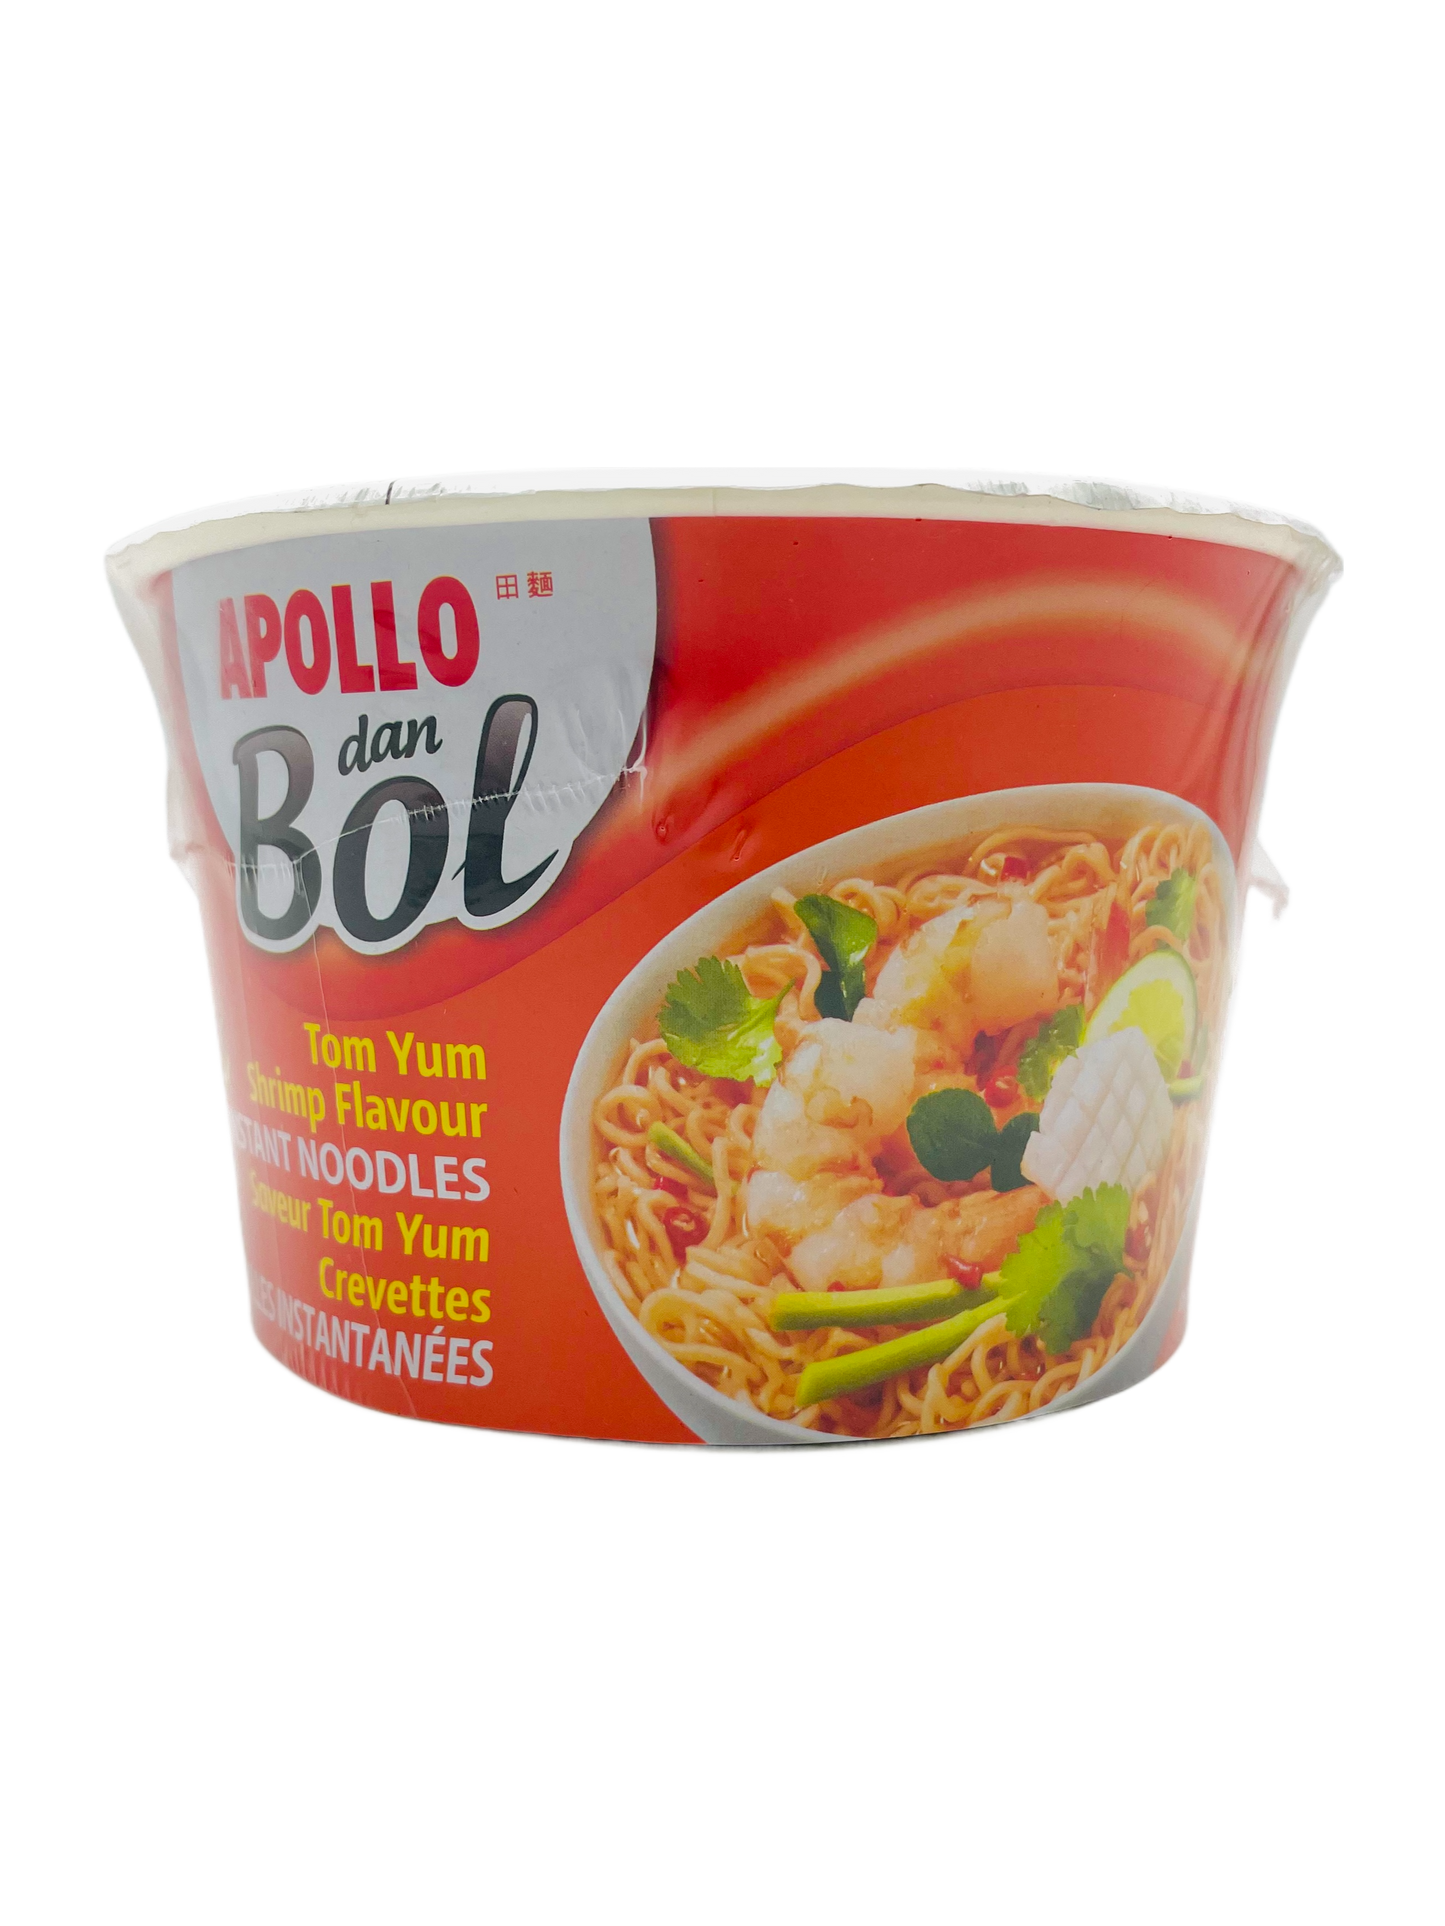 Apollo dan Bol Tom Yum Flavour Noodles 85g